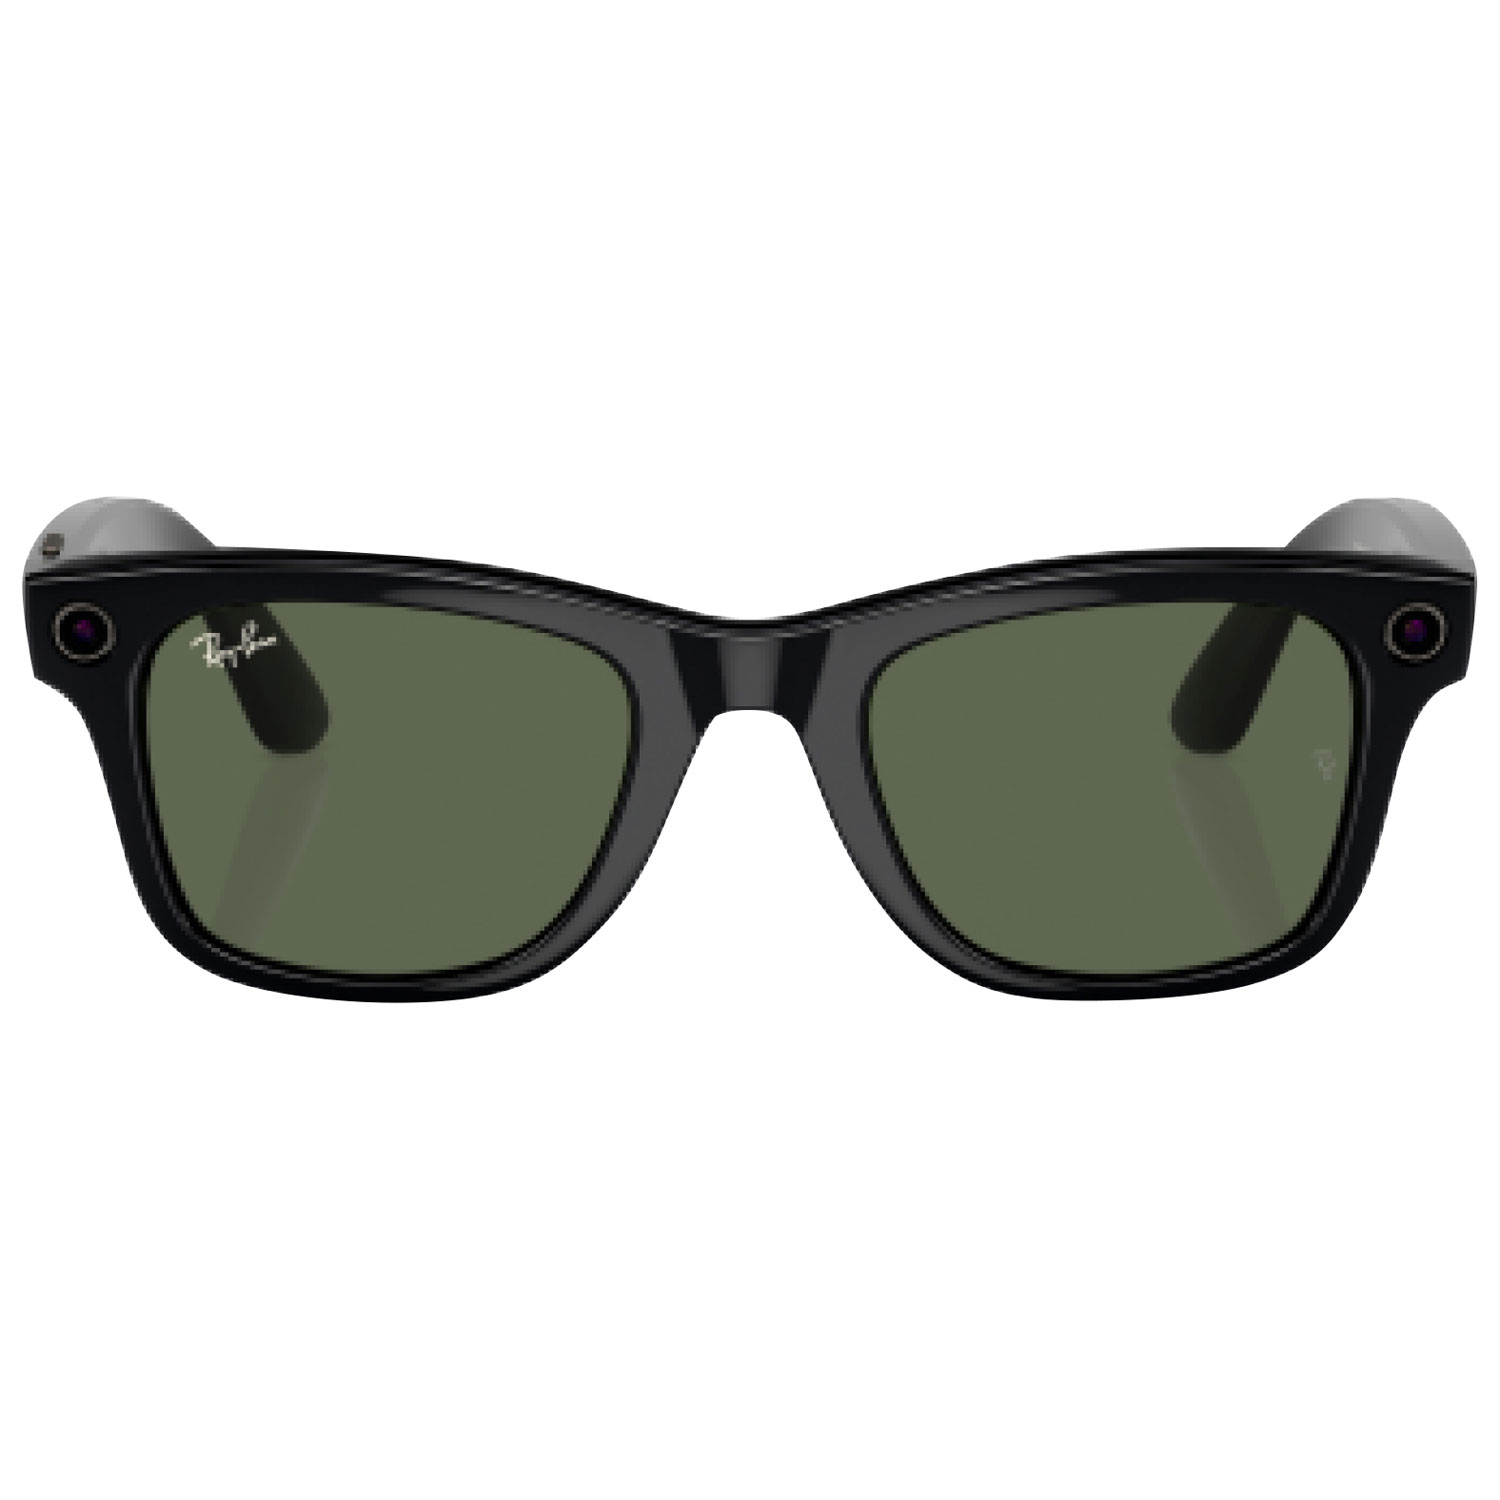 Ray-Ban | Meta Wayfarer Smart Glasses with Photo, Video & Audio - Shiny Black/G-15 Green - Large